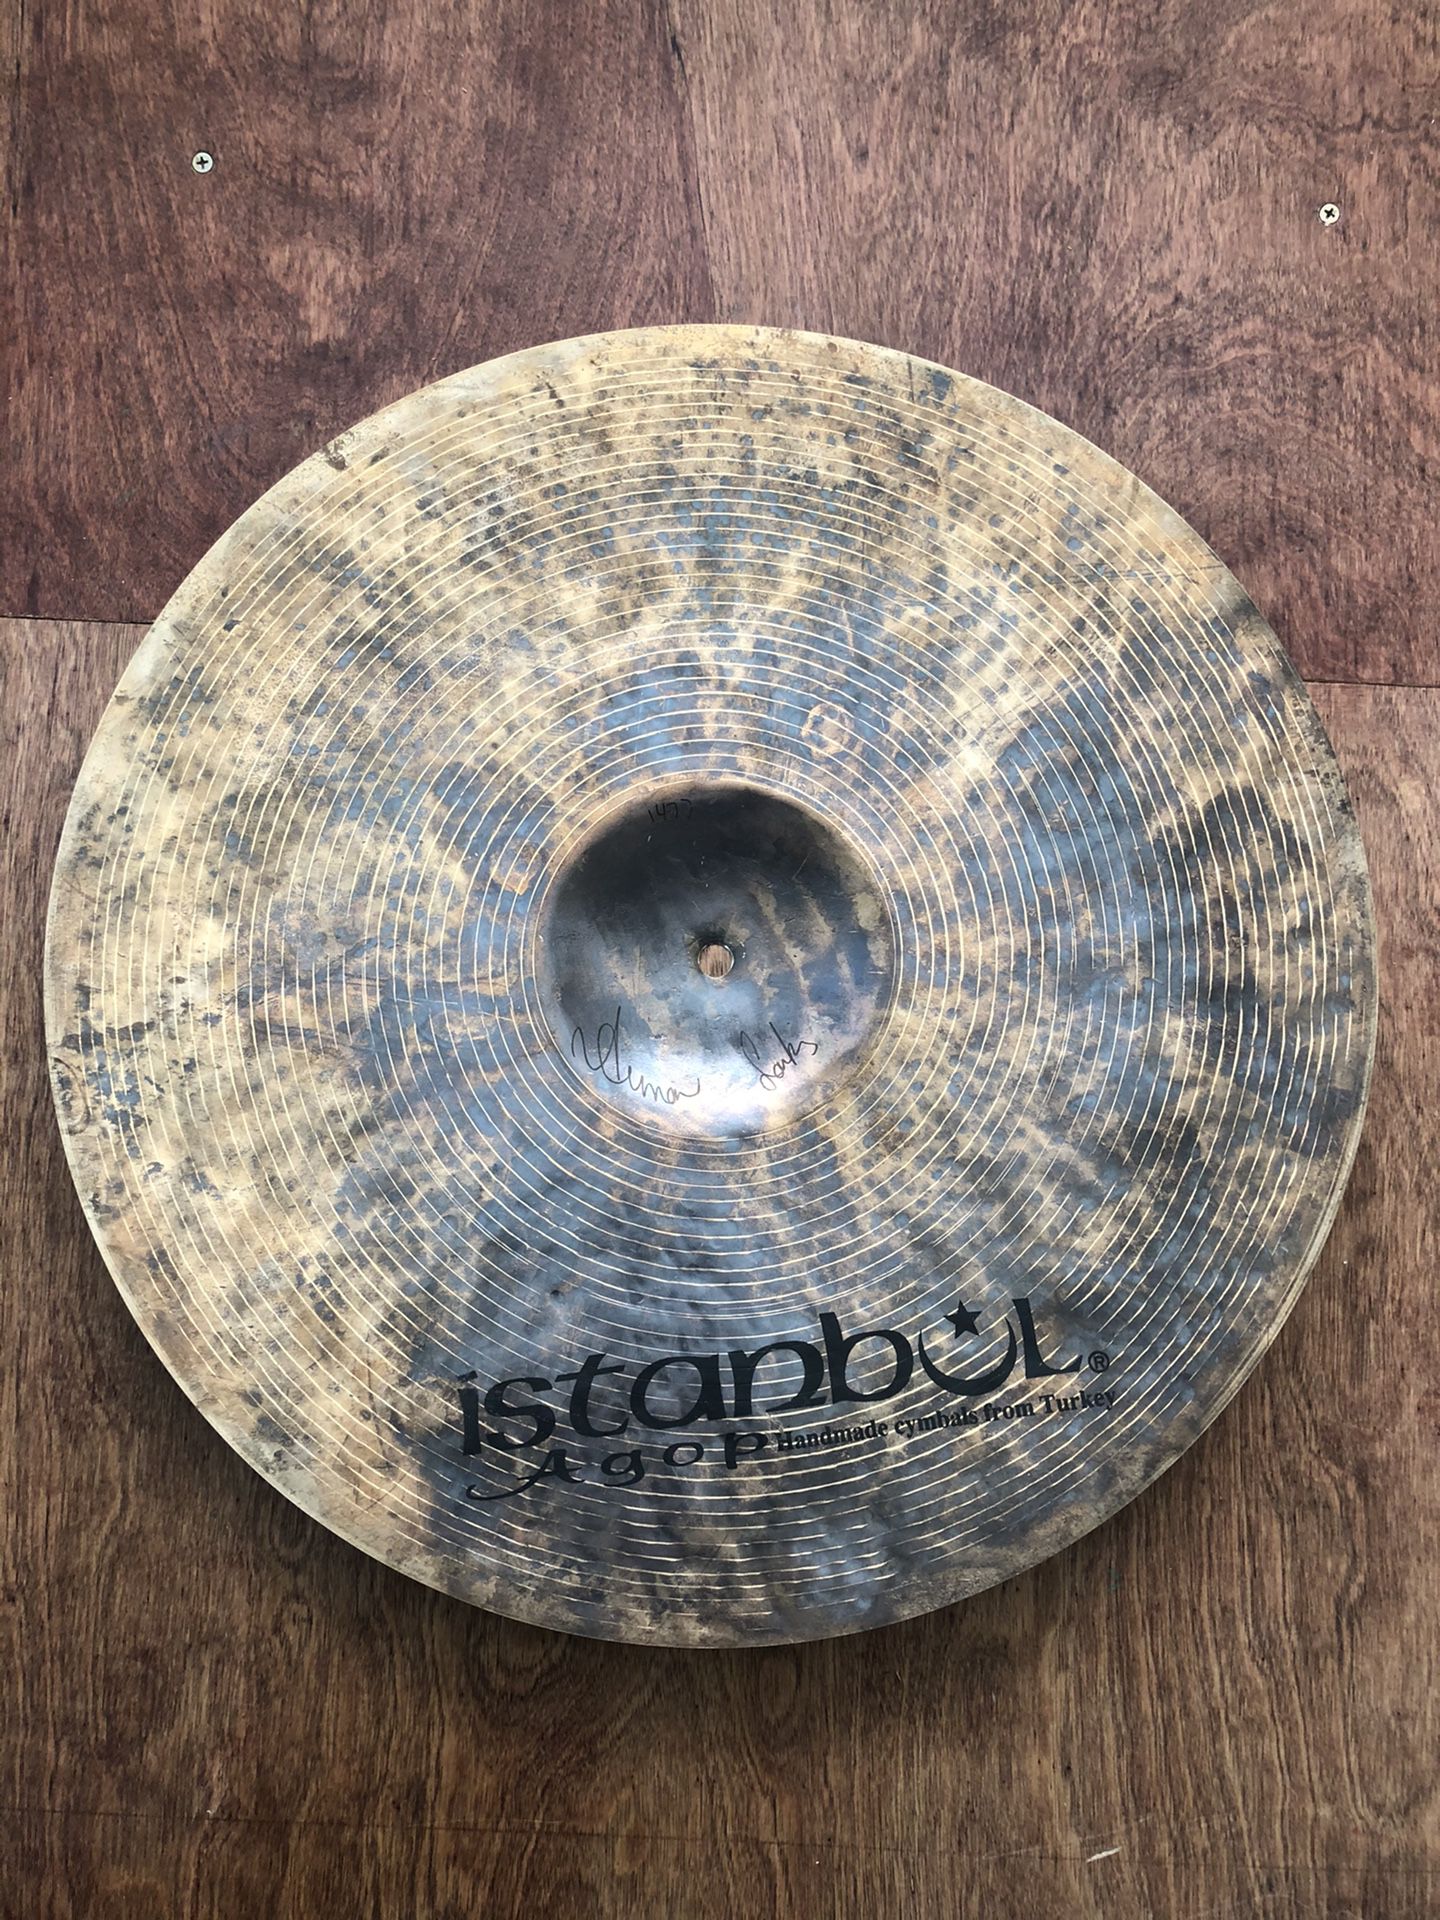 19” Istanbul agop crash ride cymbal drum drums set kit